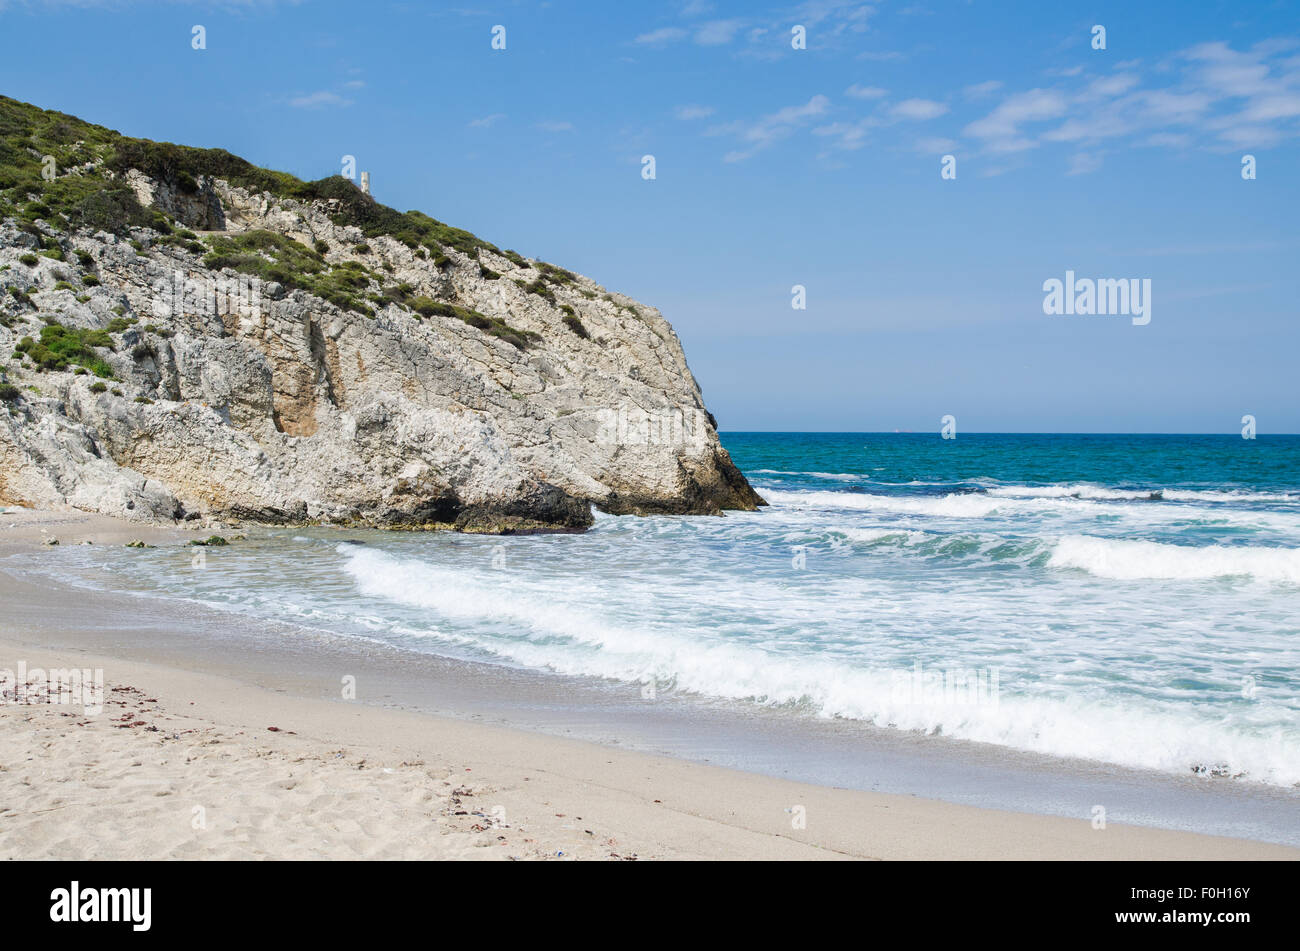 Beach at Sile, Turkey Stock Photo